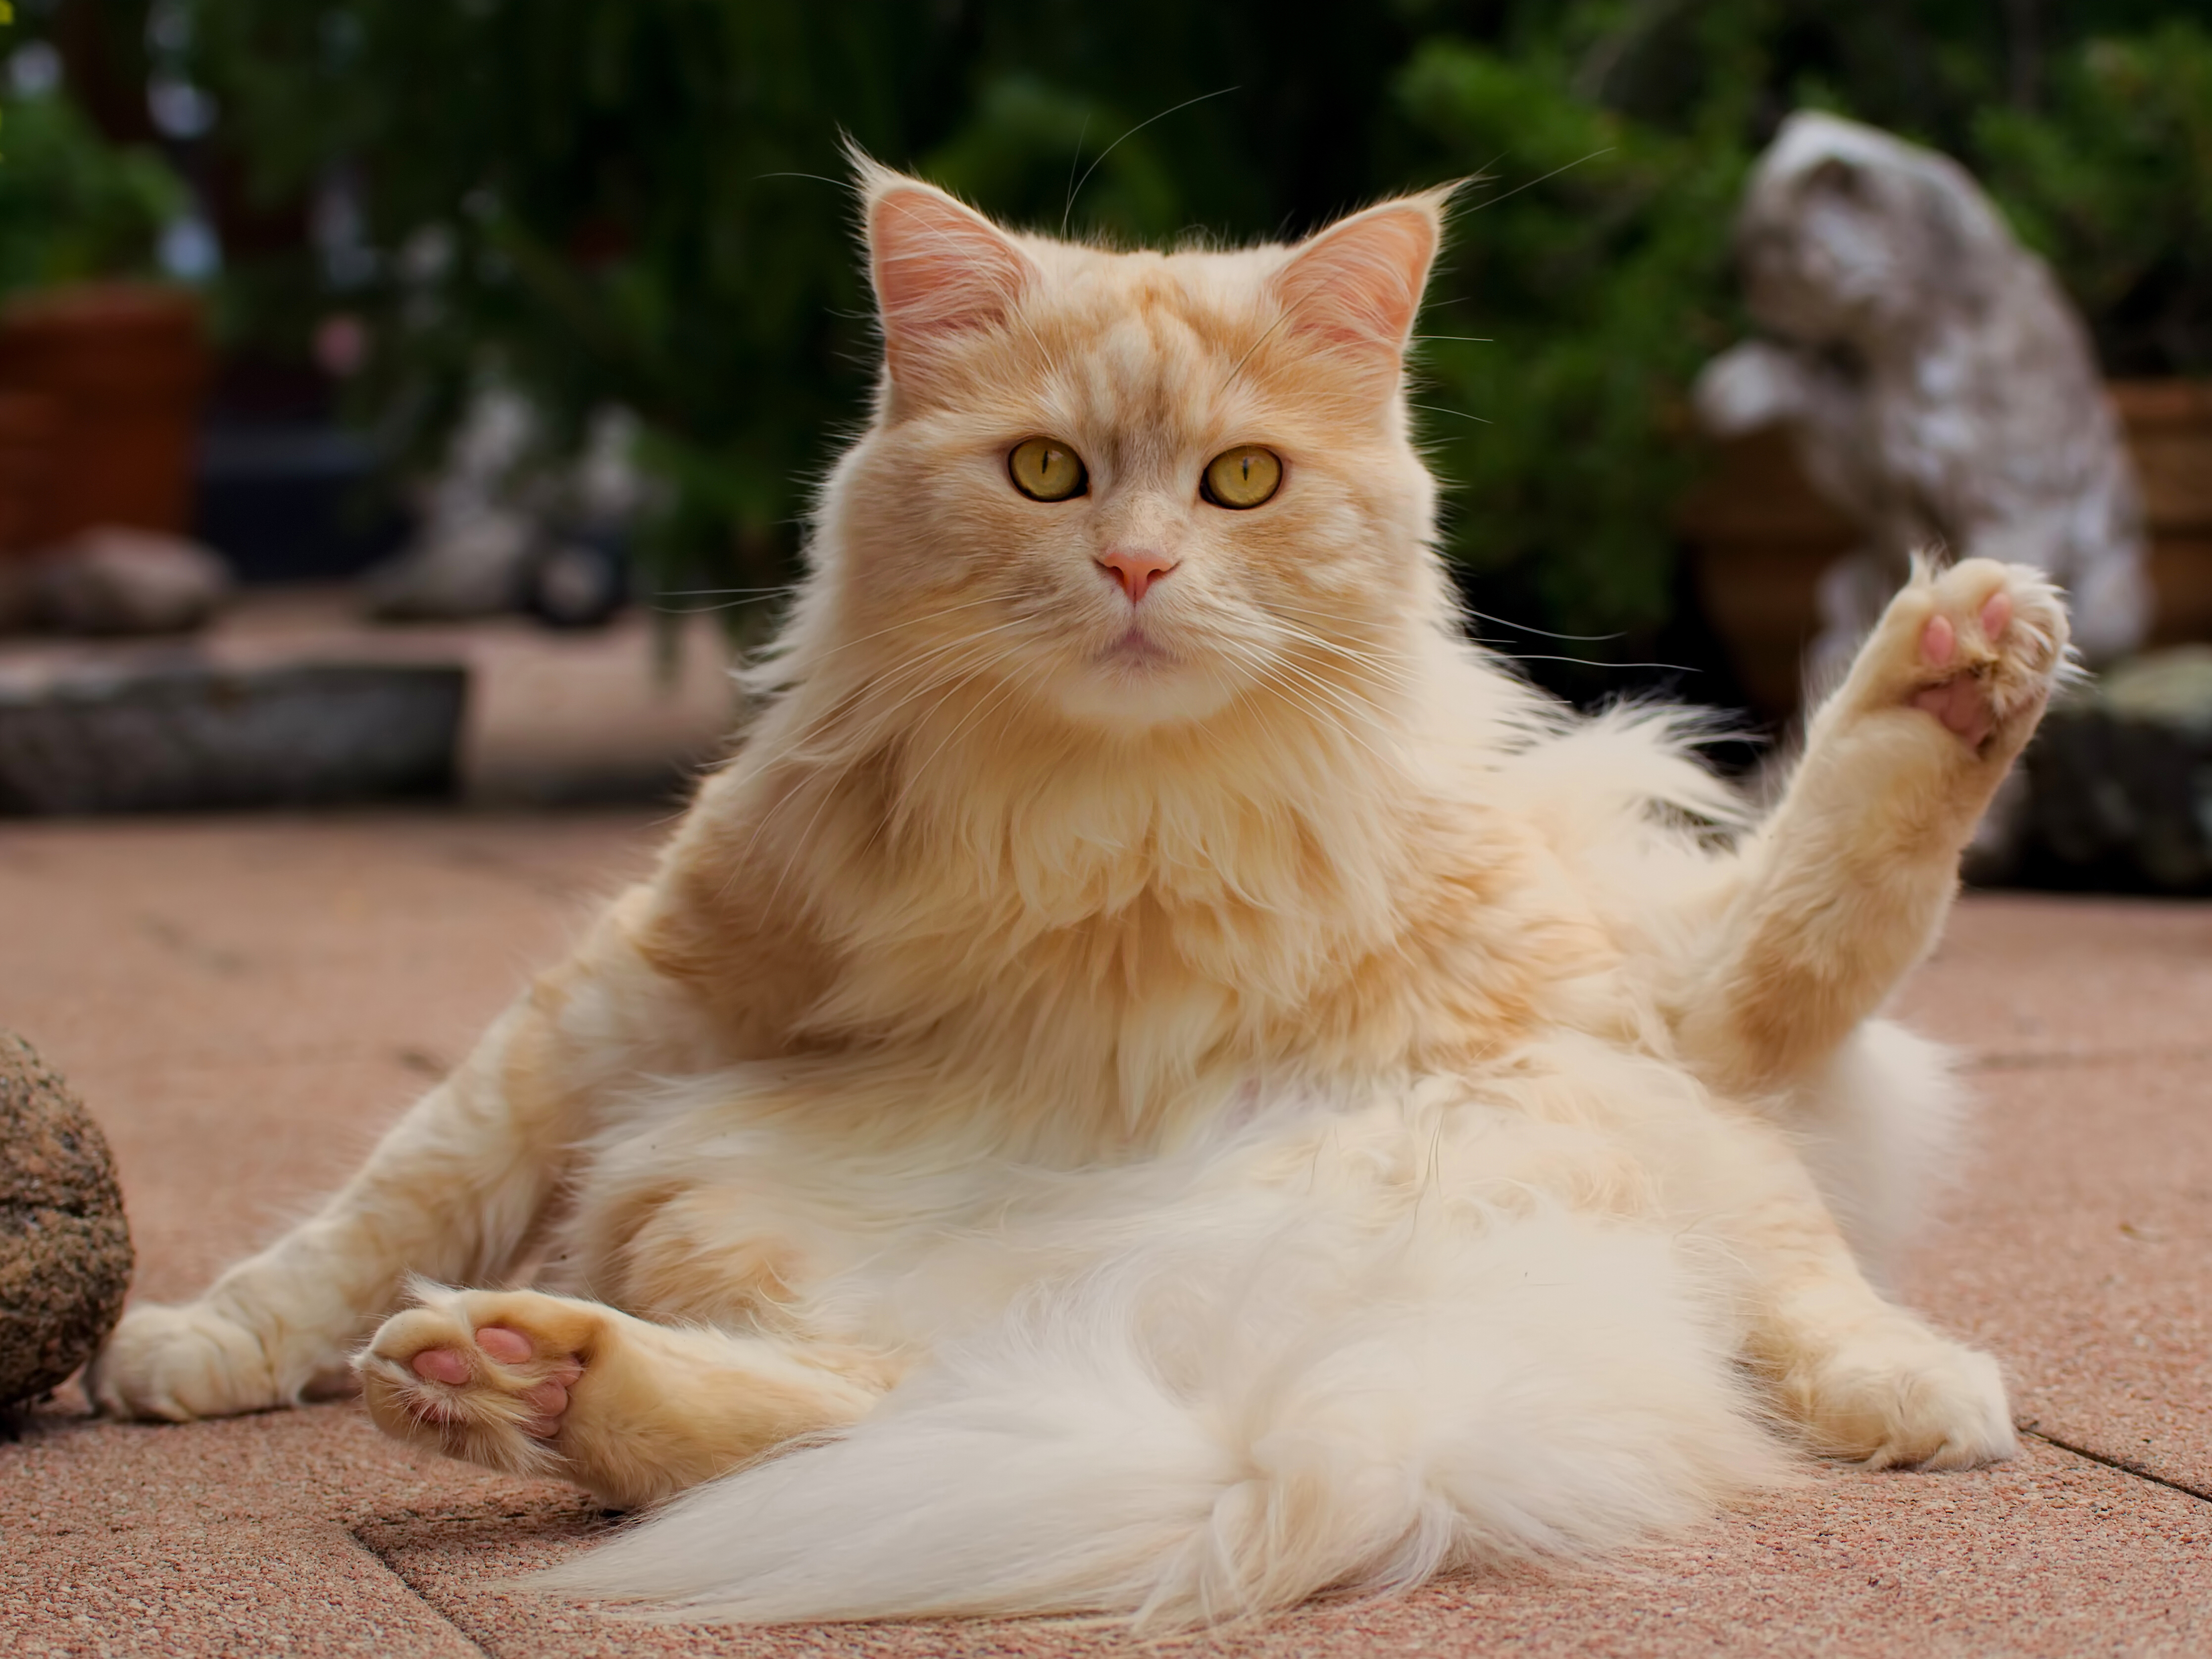 Picture me cats. Сибирская кошка палевая. Пушистый кот. Кот пушистый рыжий. Пушистая кошка.